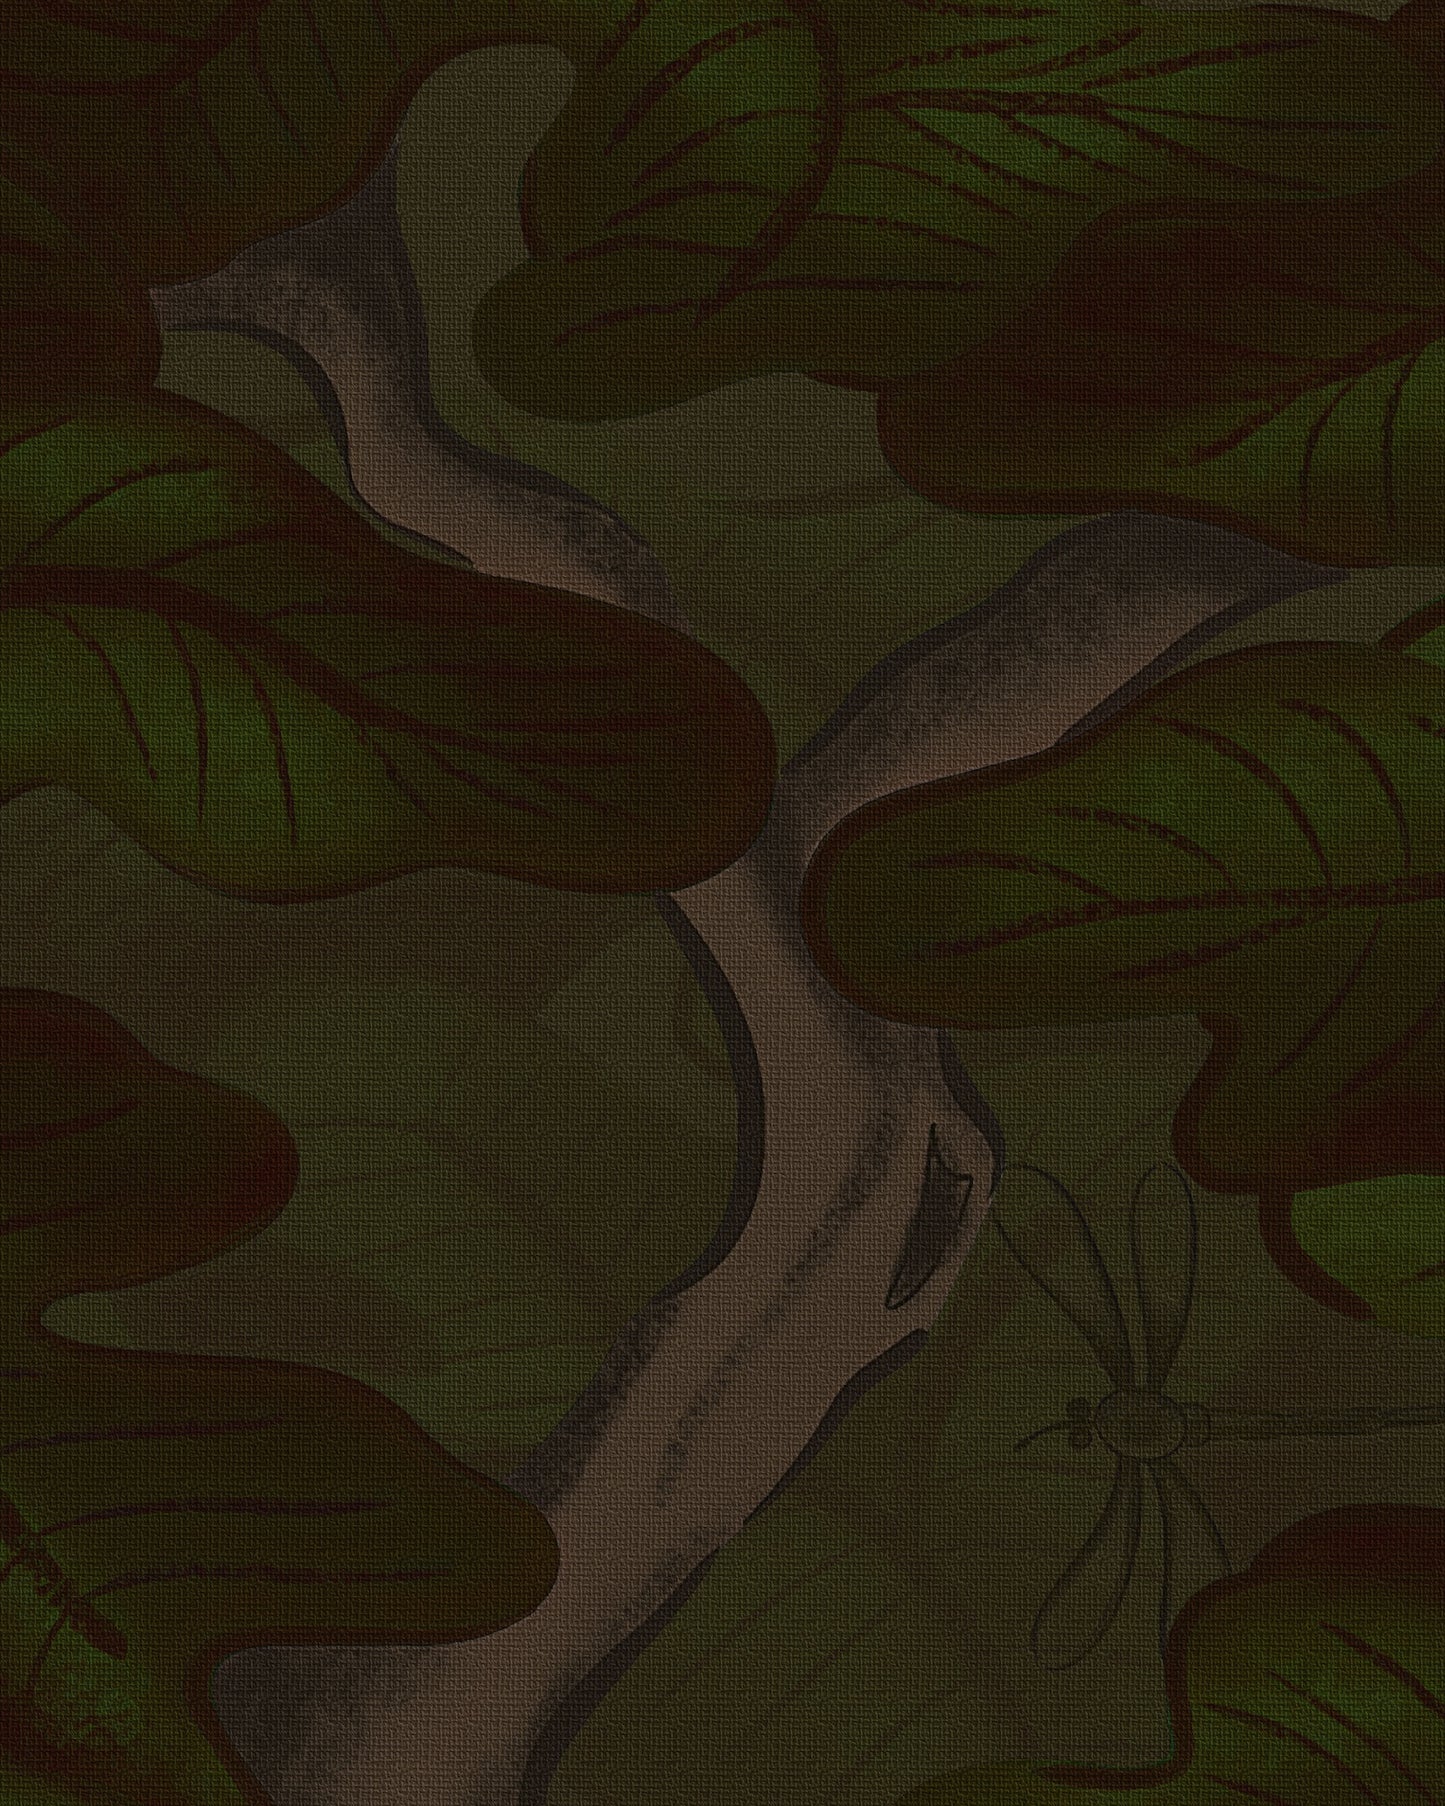 盆景森林壁画